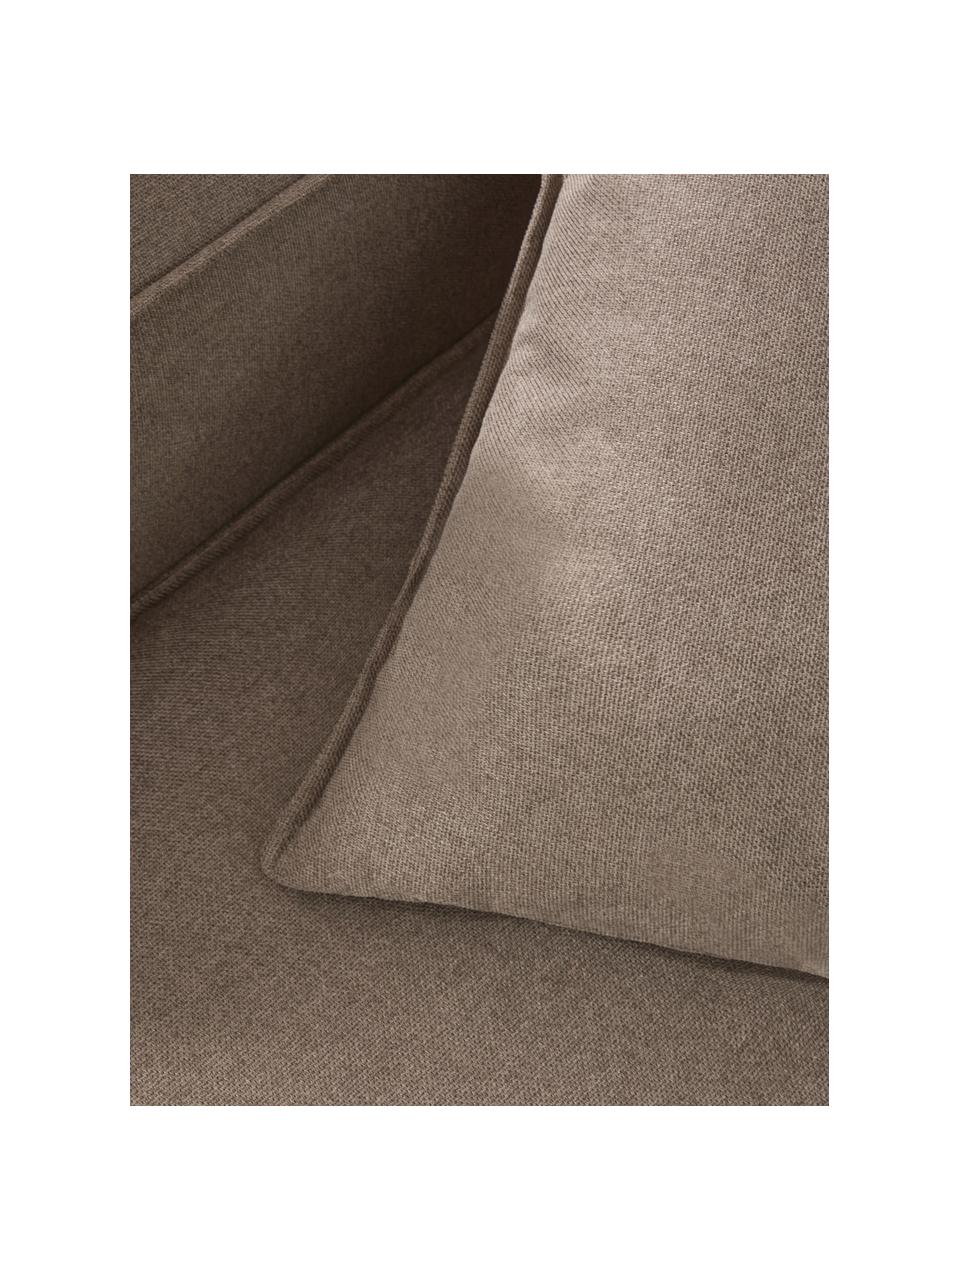 Sofa-Kissen Lennon in Braun, Bezug: 100% Polyester, Webstoff Braun, B 60 x L 60 cm